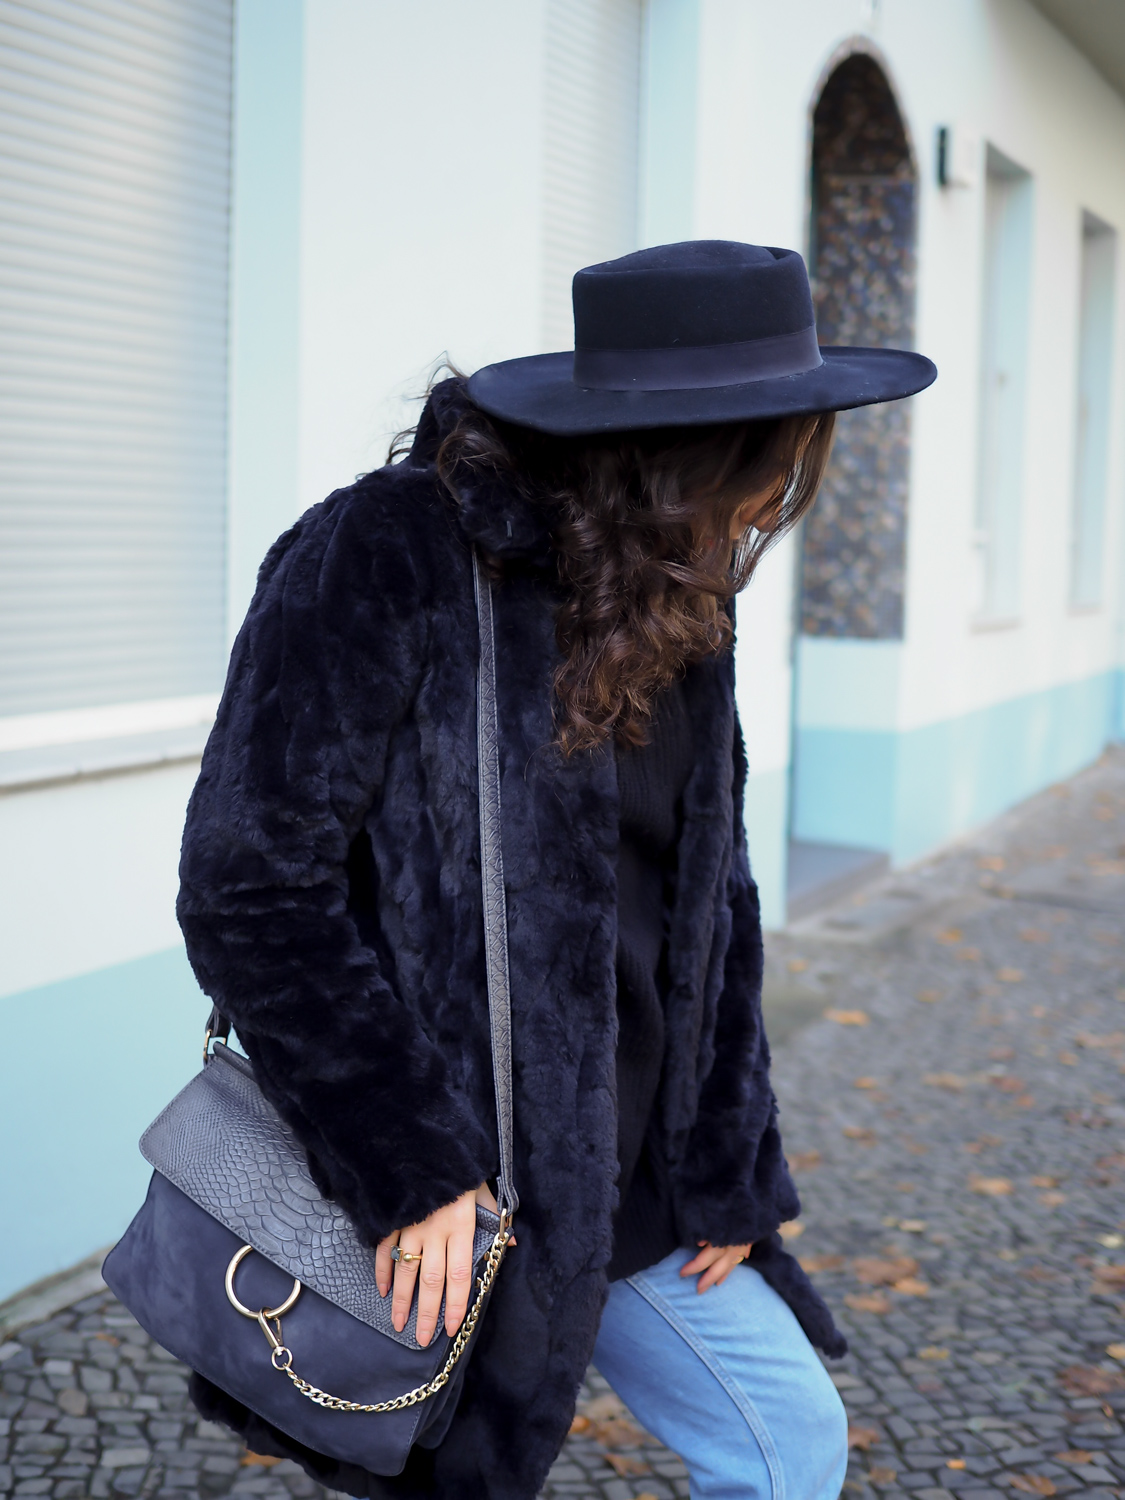 dorothy perkins black fluffy coat vintage inspired fakefur kunstfell mom jeans retro hipster look outfit fashionblogger modebloggerin berlin samieze_